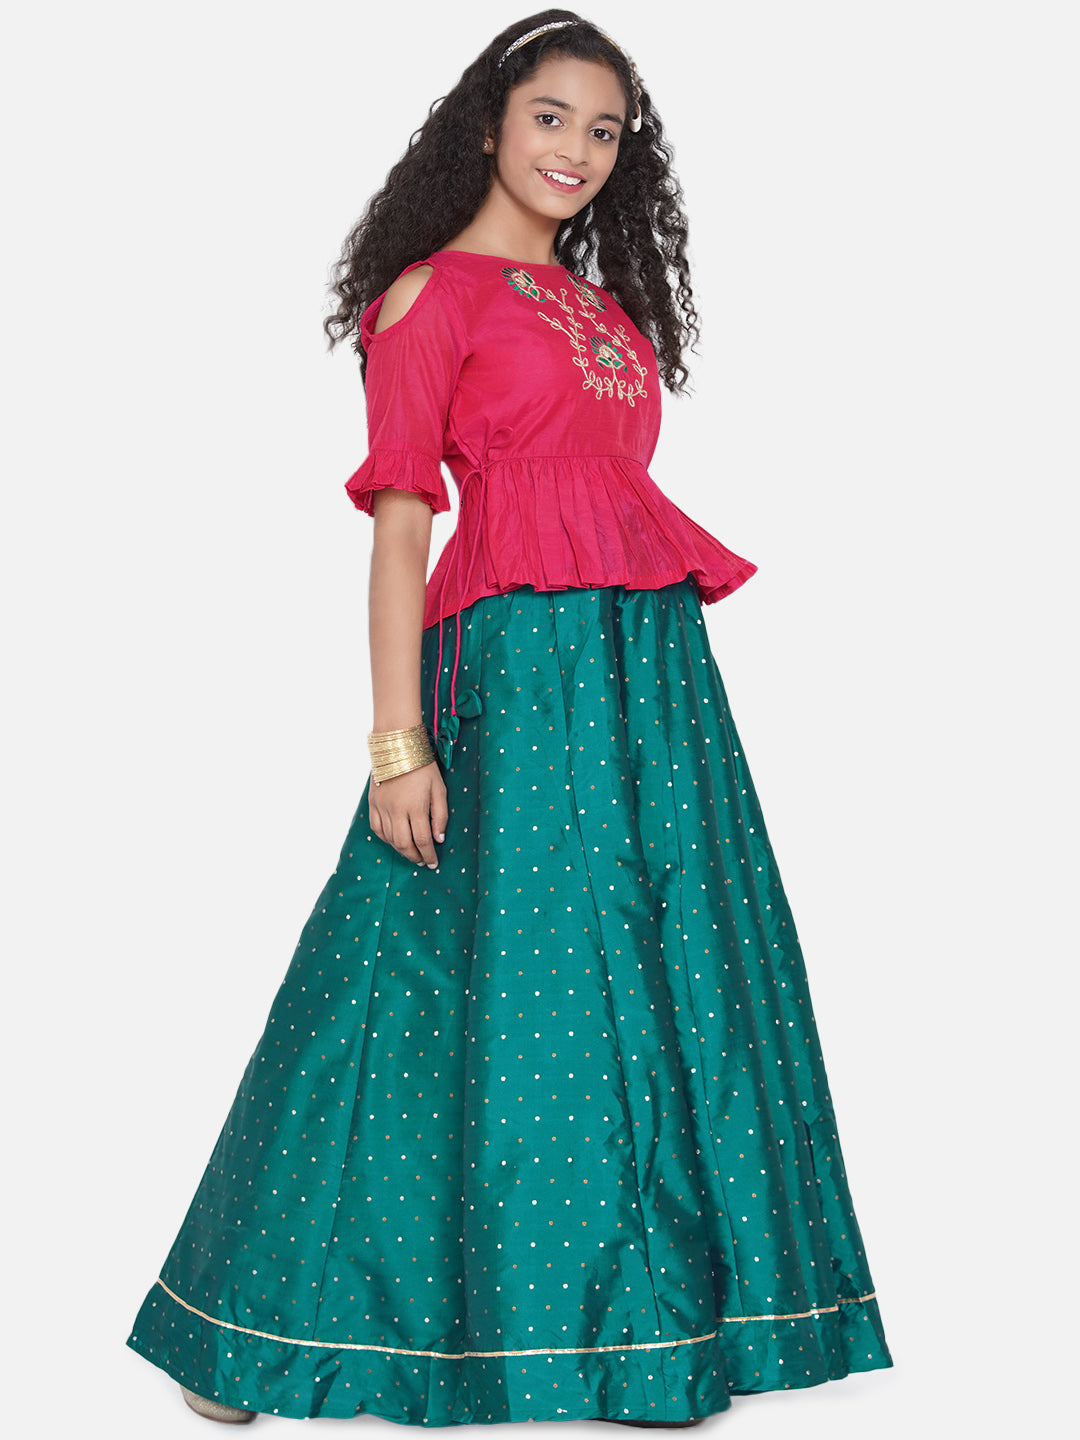 Girls Pink & Green Embroidered Choli Ready To Wear Lehenga - Bitiya By Bhama